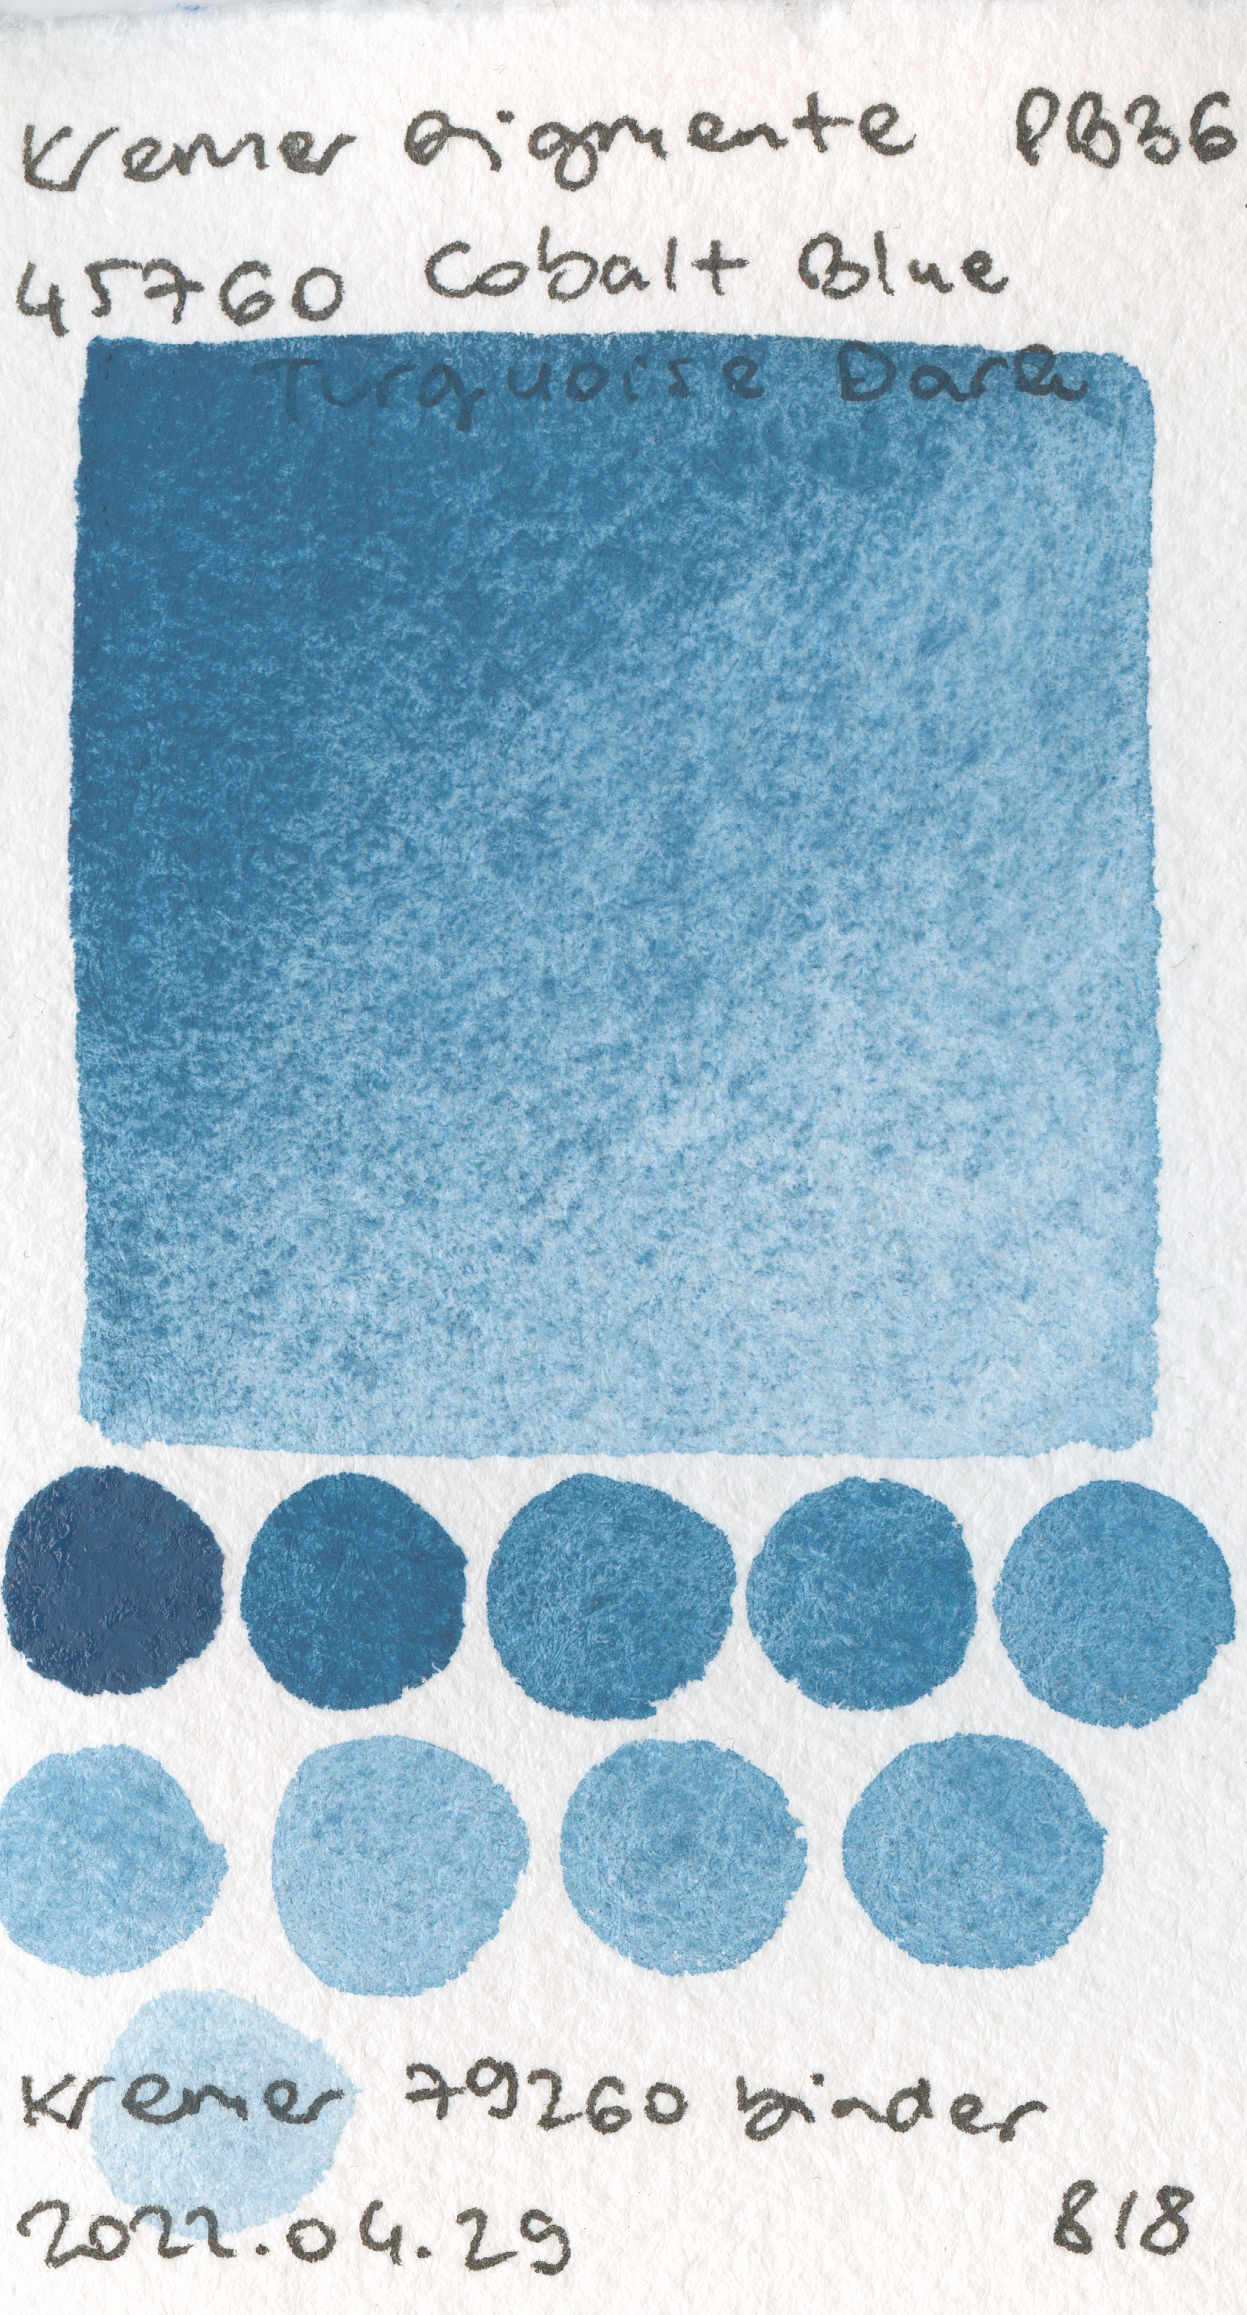 Kremer Pigmente [Dry] Pigments 45760 Cobalt Blue Turquoise Dark PB36 watercolor swatch